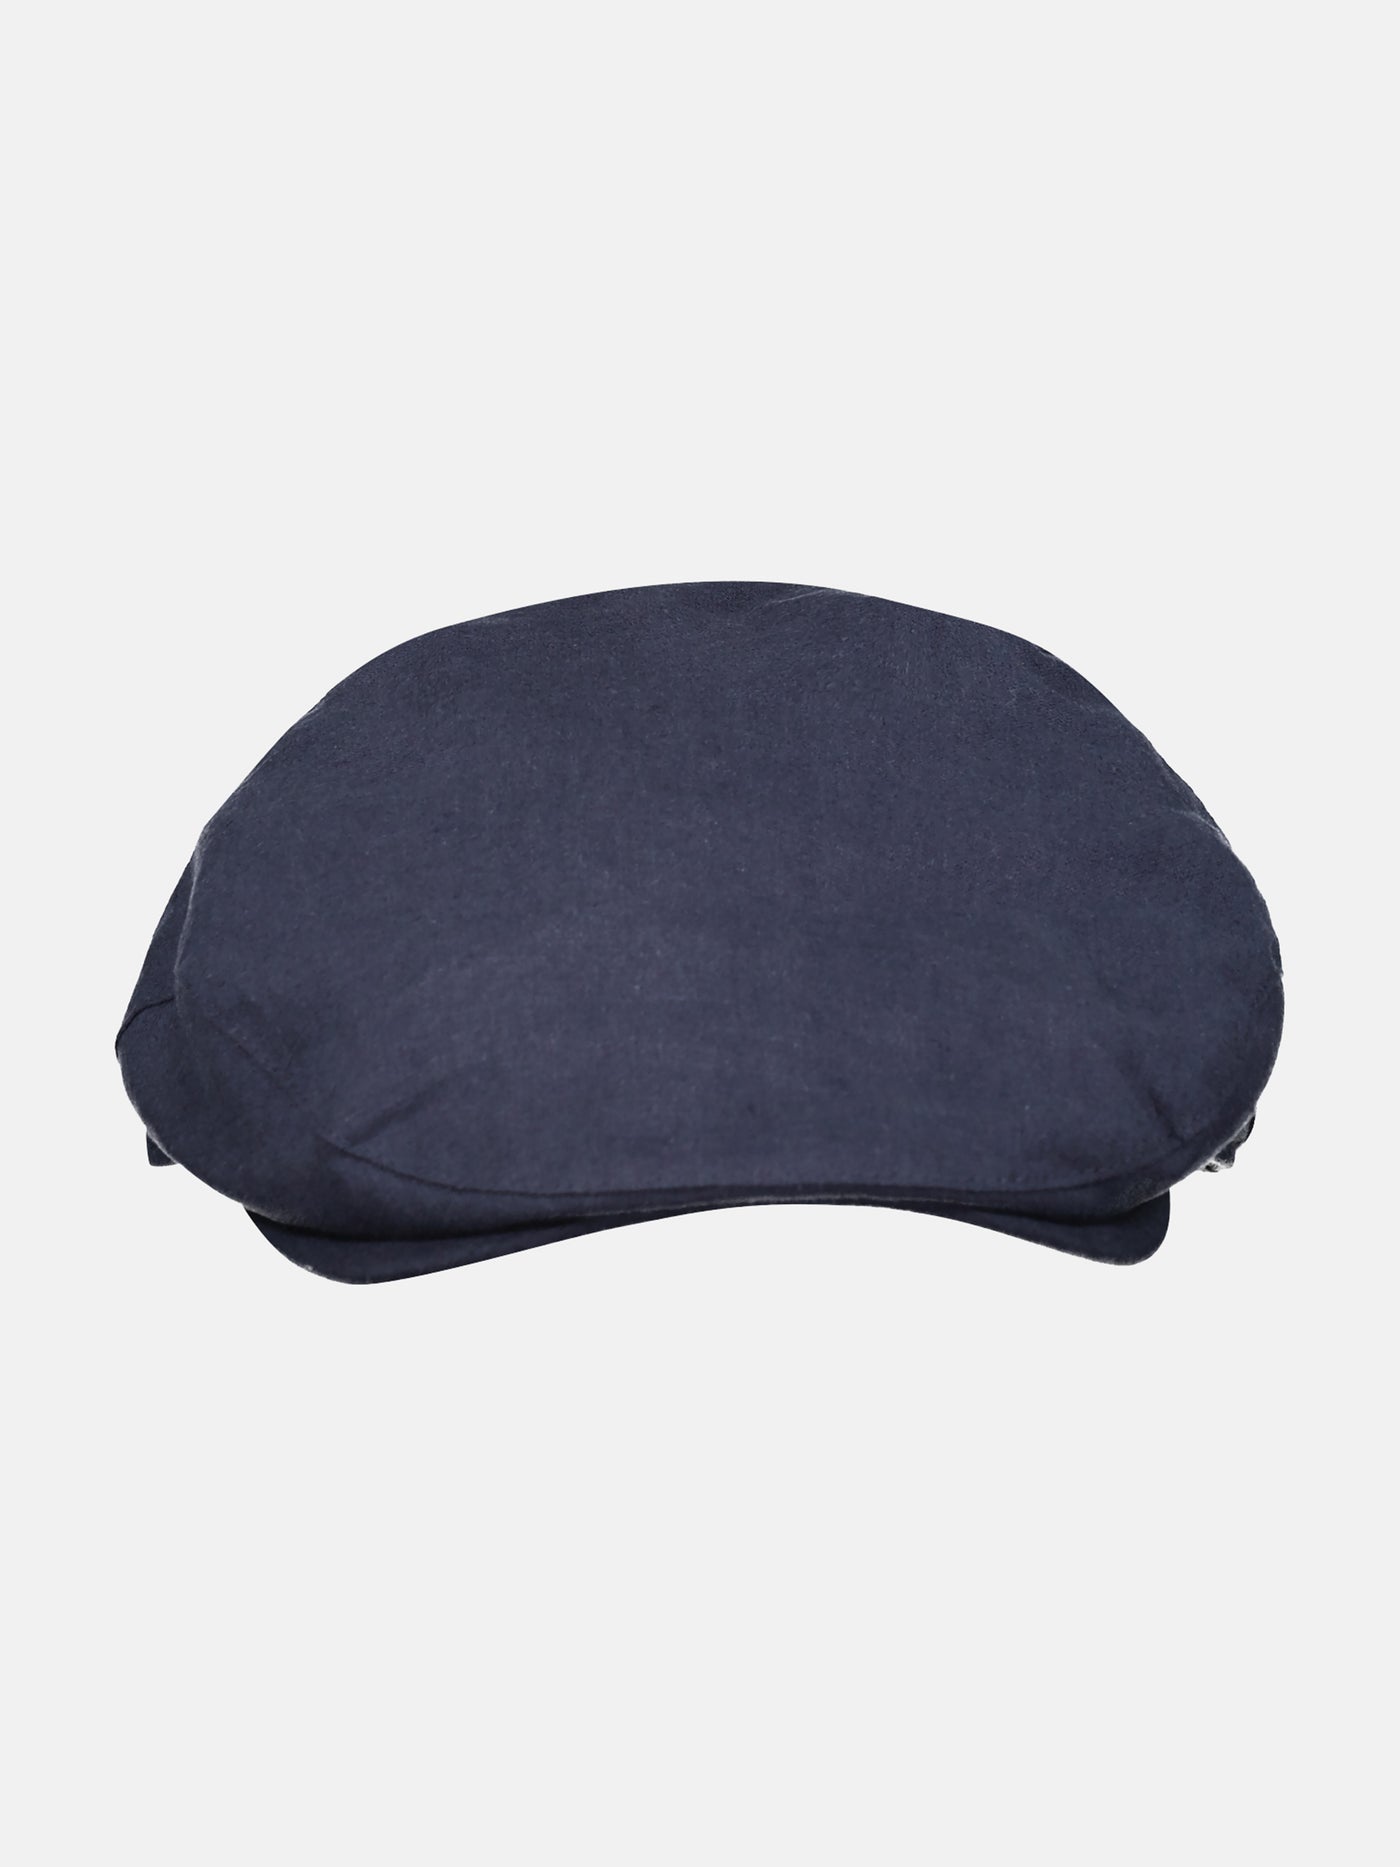 Flat cap, linen